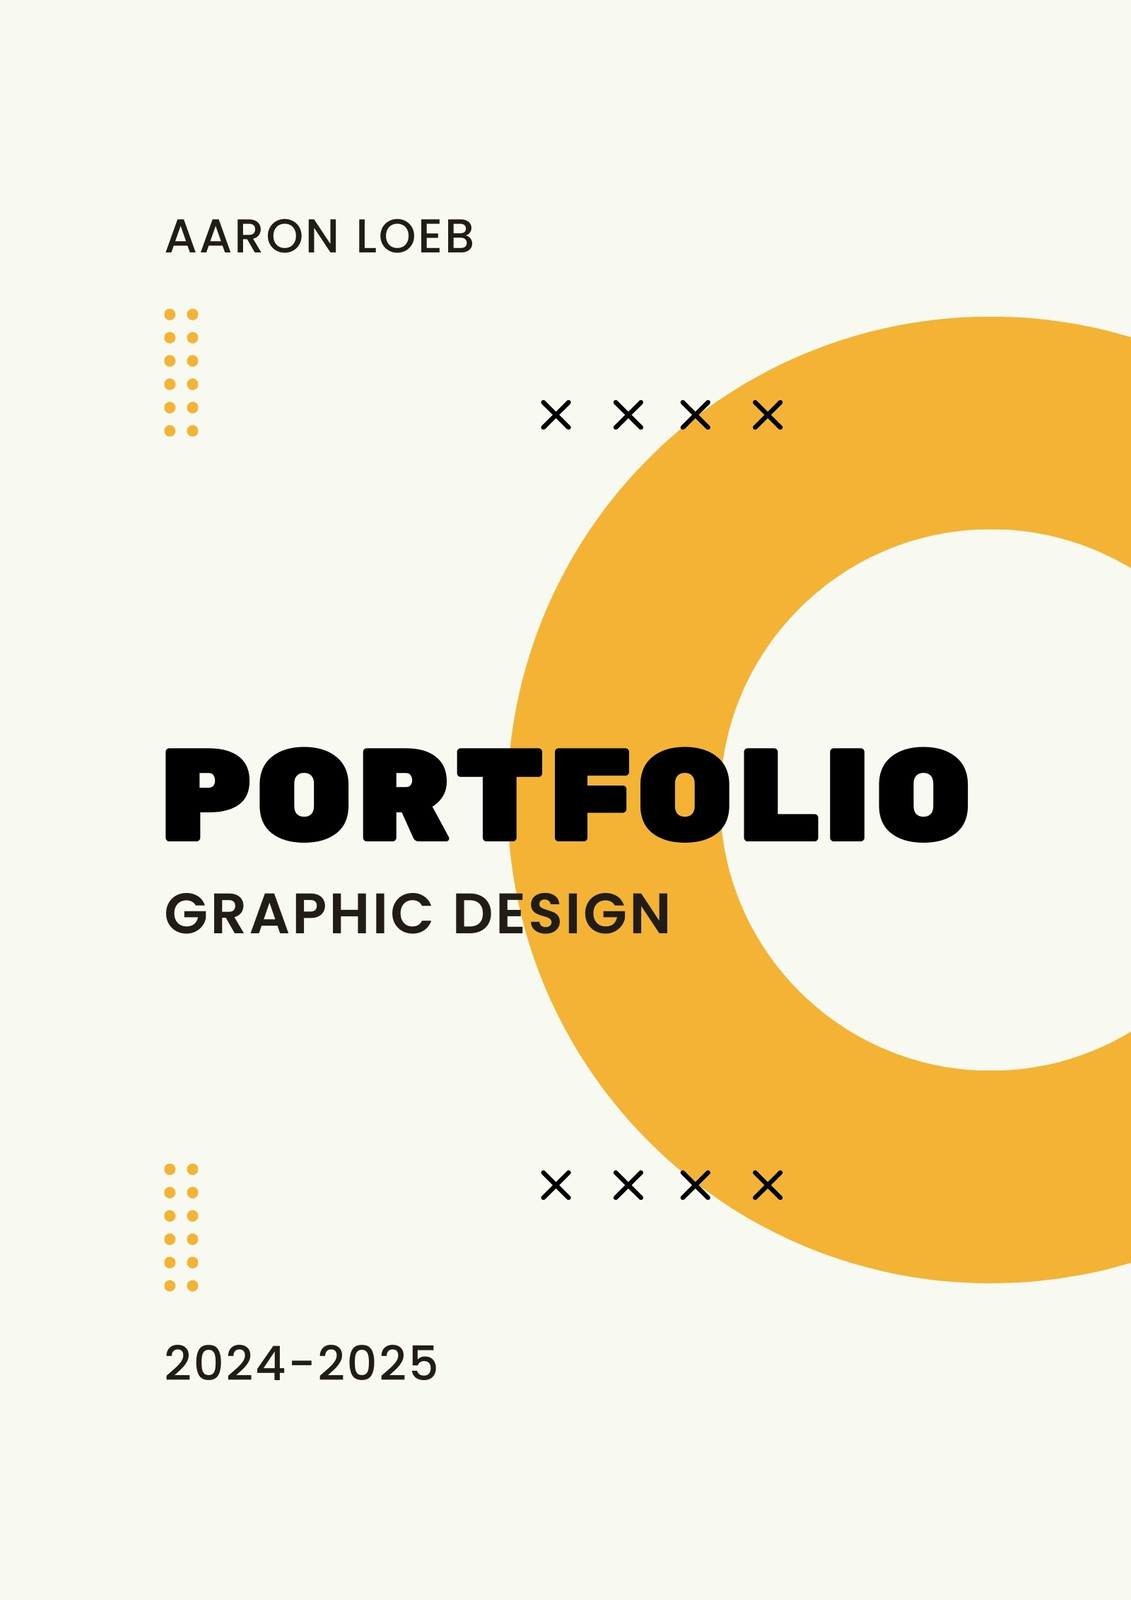 Free and customizable portfolio templates